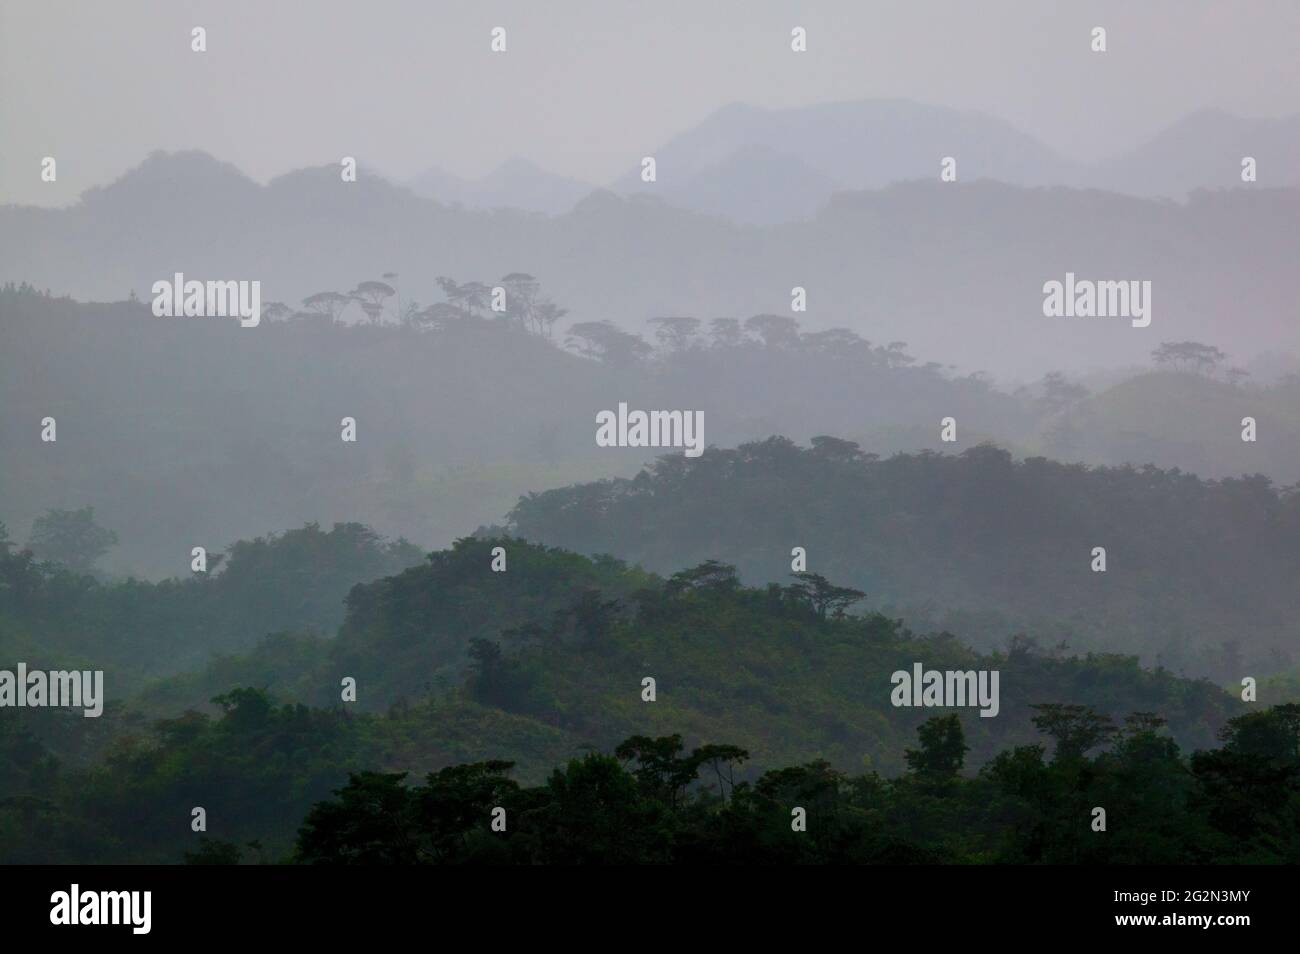 Panama landscape with rainfall over the hills, seen from Cerro la Vieja, Chiguiri arriba, Cocle province, Republic of Panama, Central America. Stock Photo